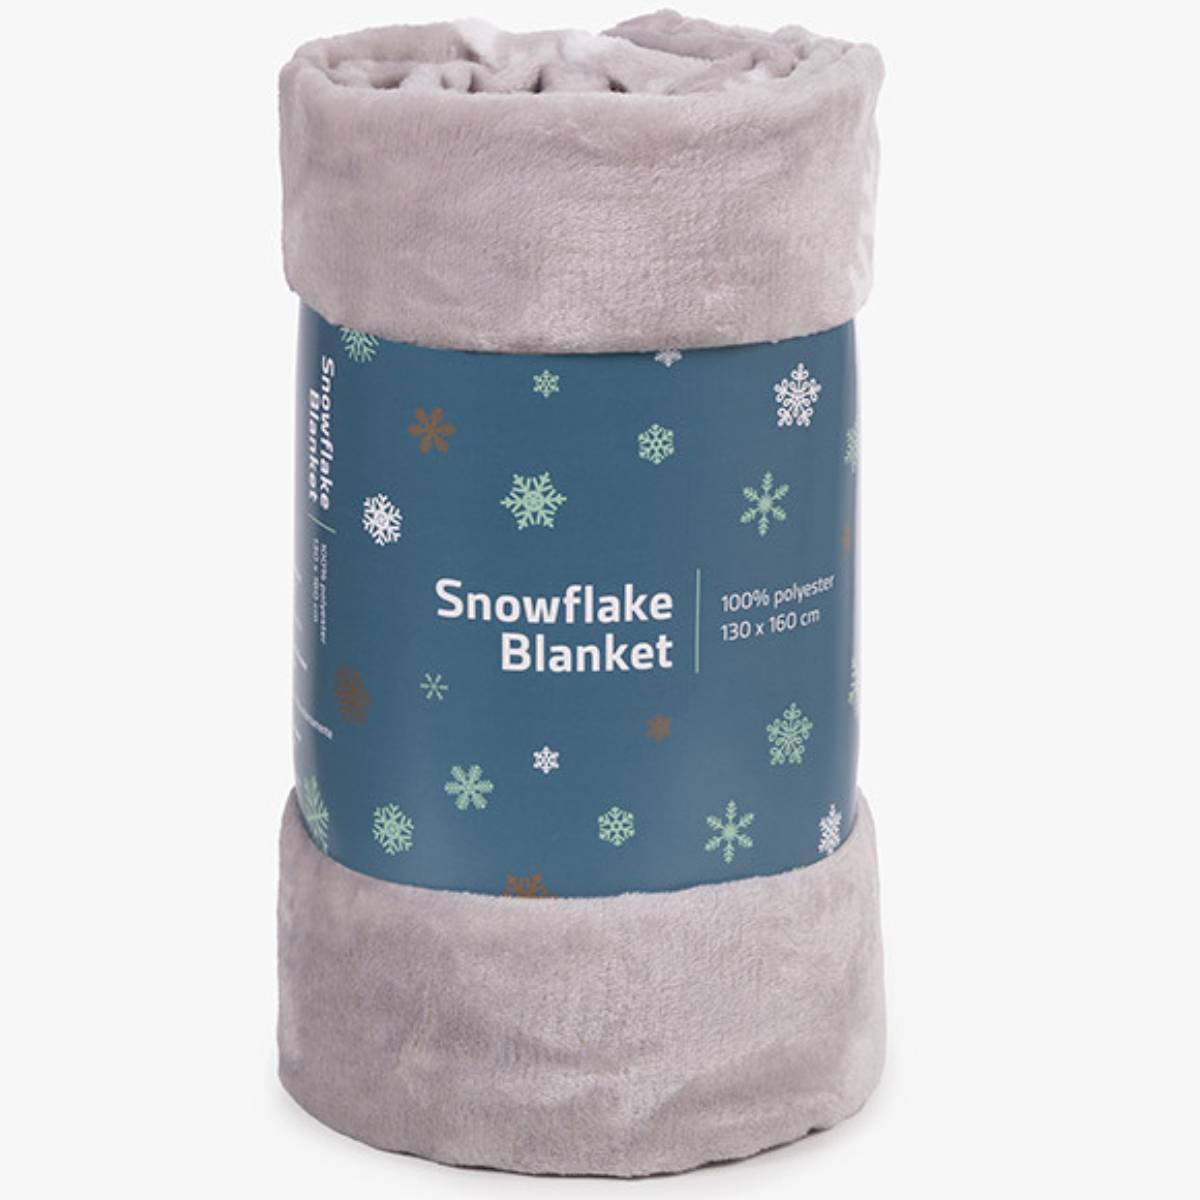 Fleece blanket 130 x 160 cm 100% polyester snowflake